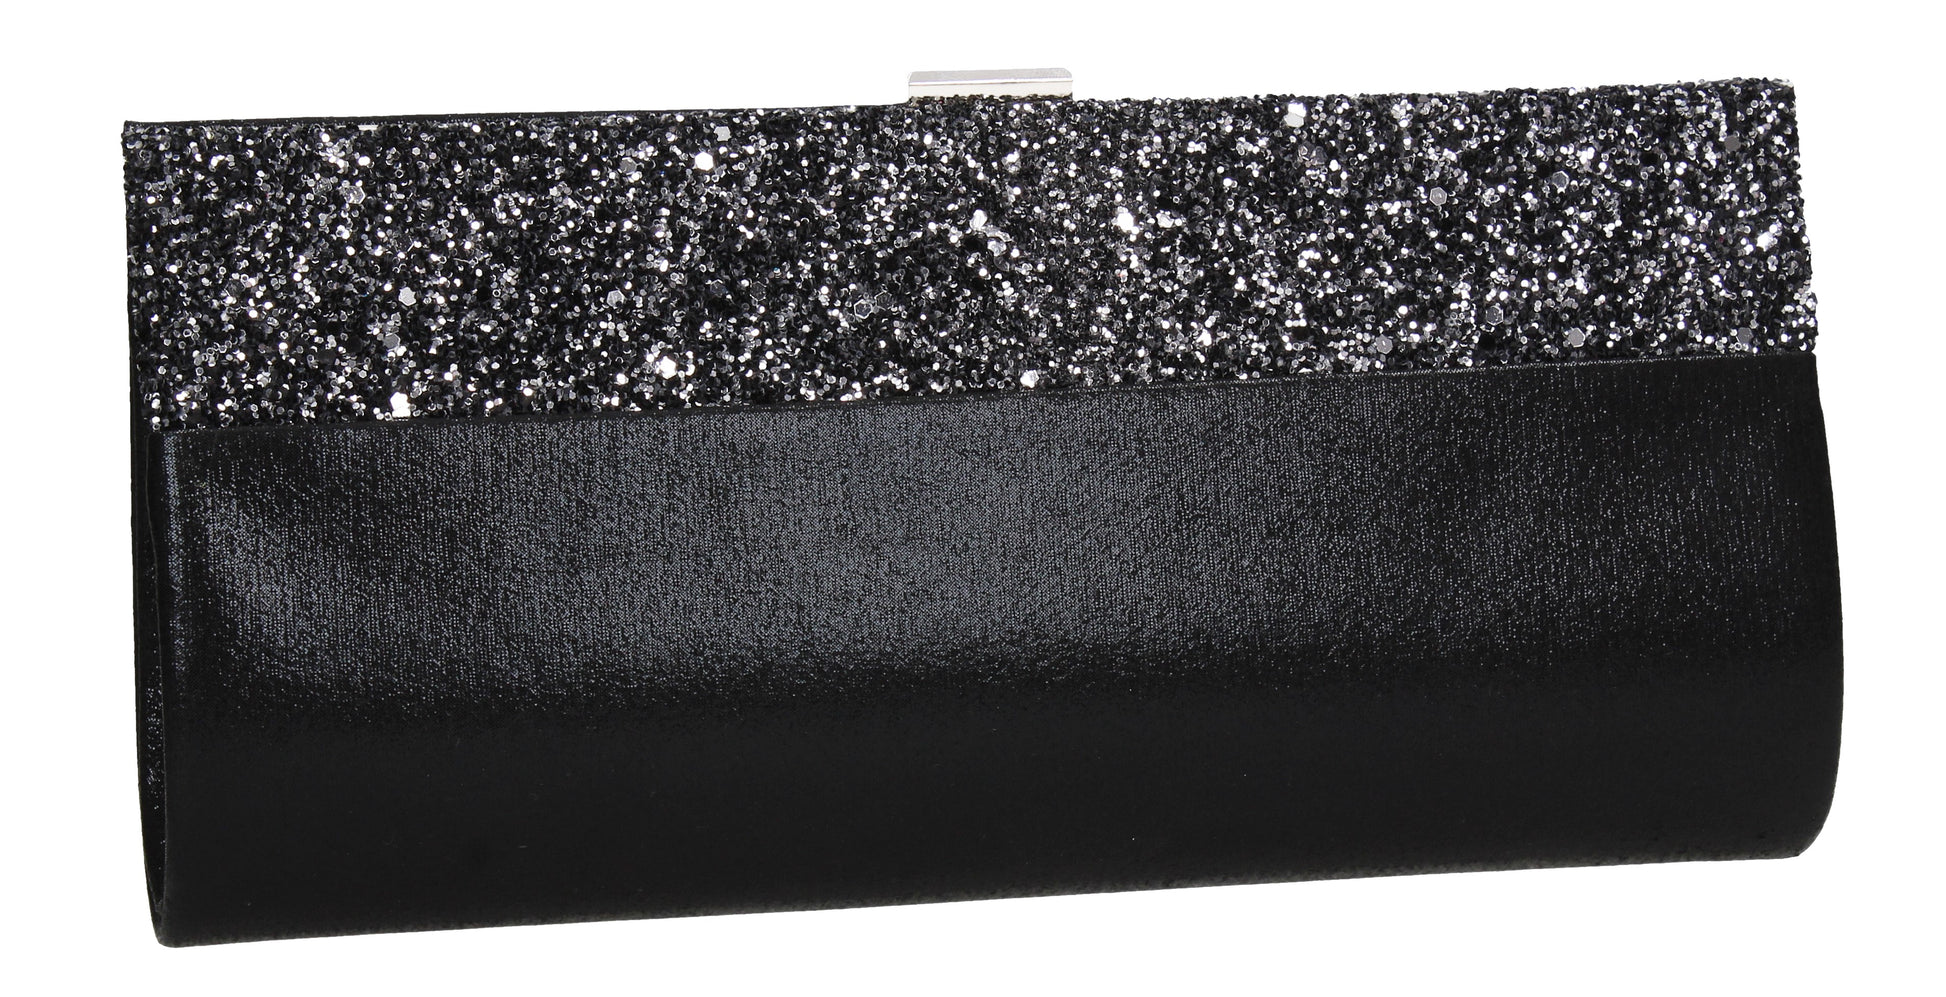 SWANKYSWANS Kathy Glitter Clutch Bag Black Cute Cheap Clutch Bag For Weddings School and Work